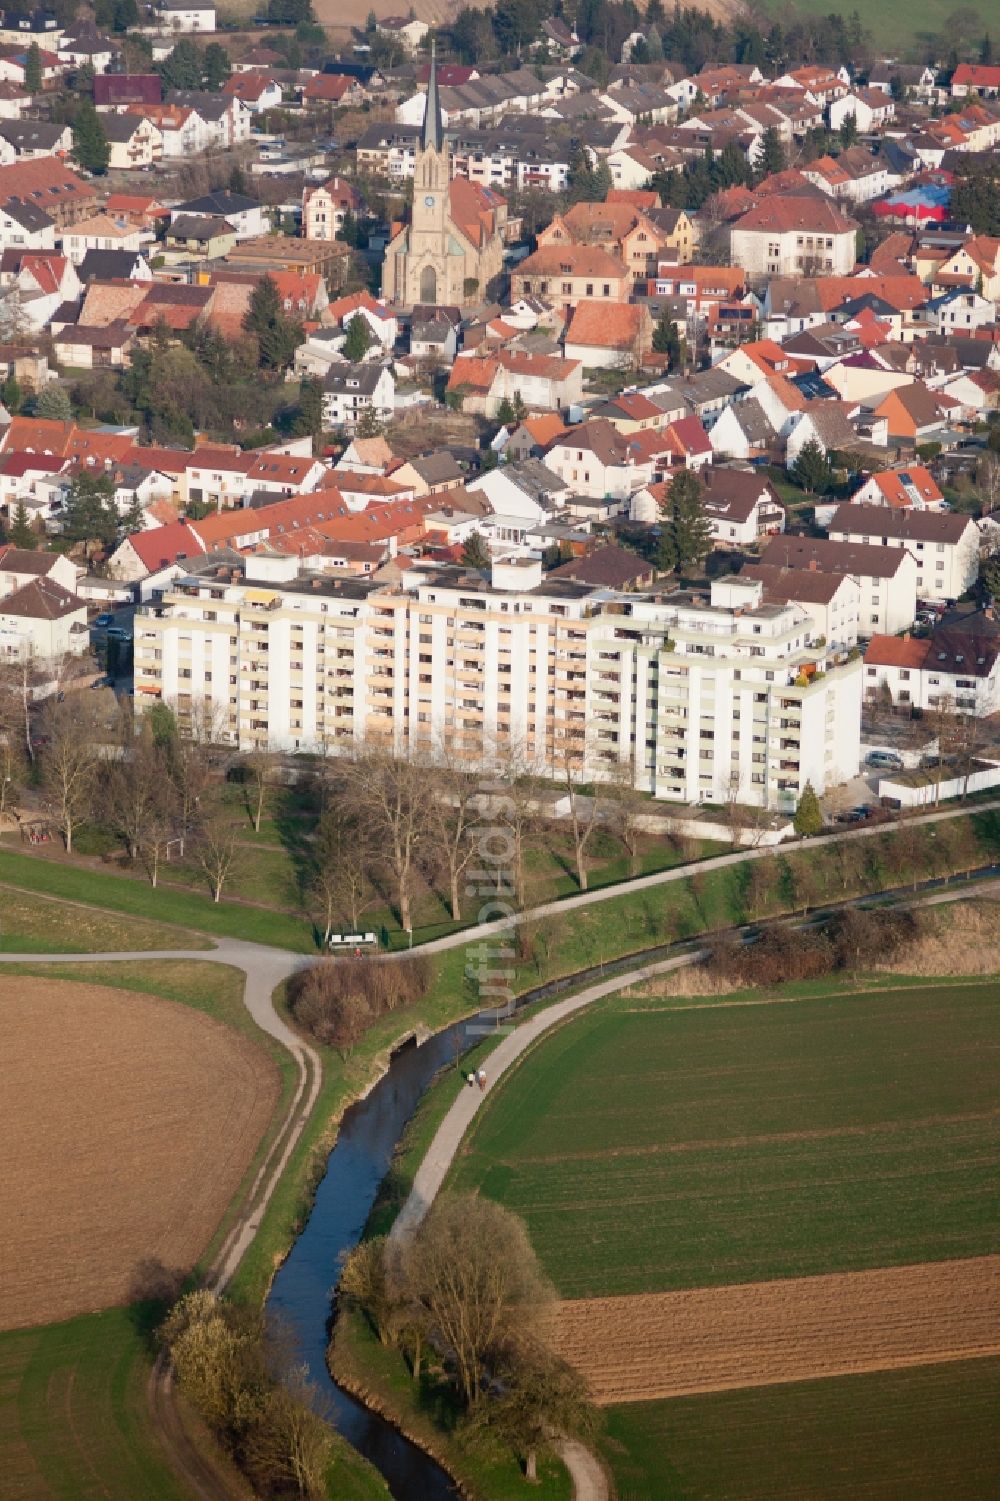 Luftbild Brühl - Ortsansicht im Ortsteil Rheinau in Brühl im Bundesland Baden-Württemberg